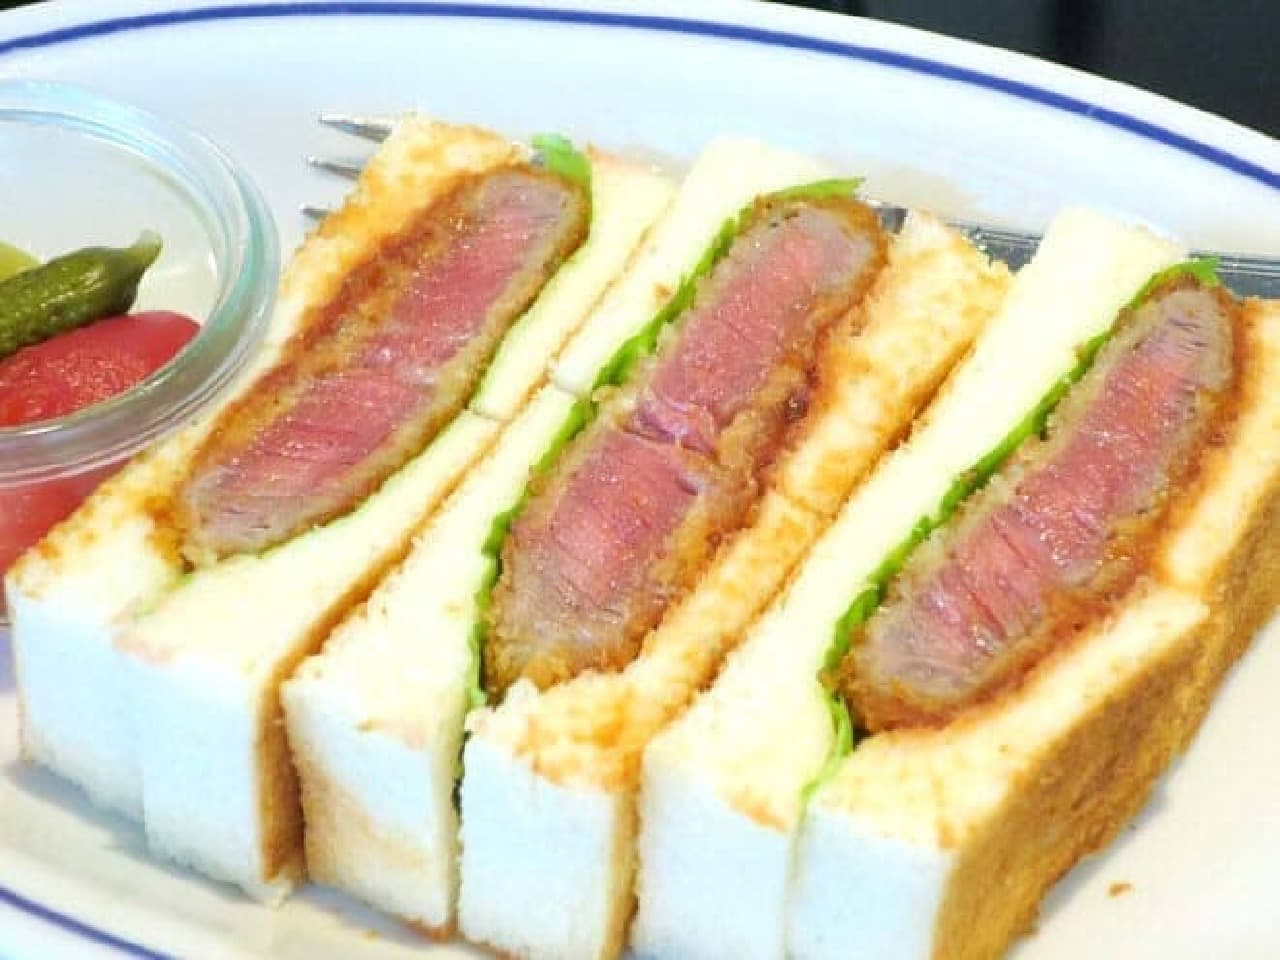 "Beef pork cutlet sandwich" offered at "Cafe Kimuraya" in Ginza, Tokyo